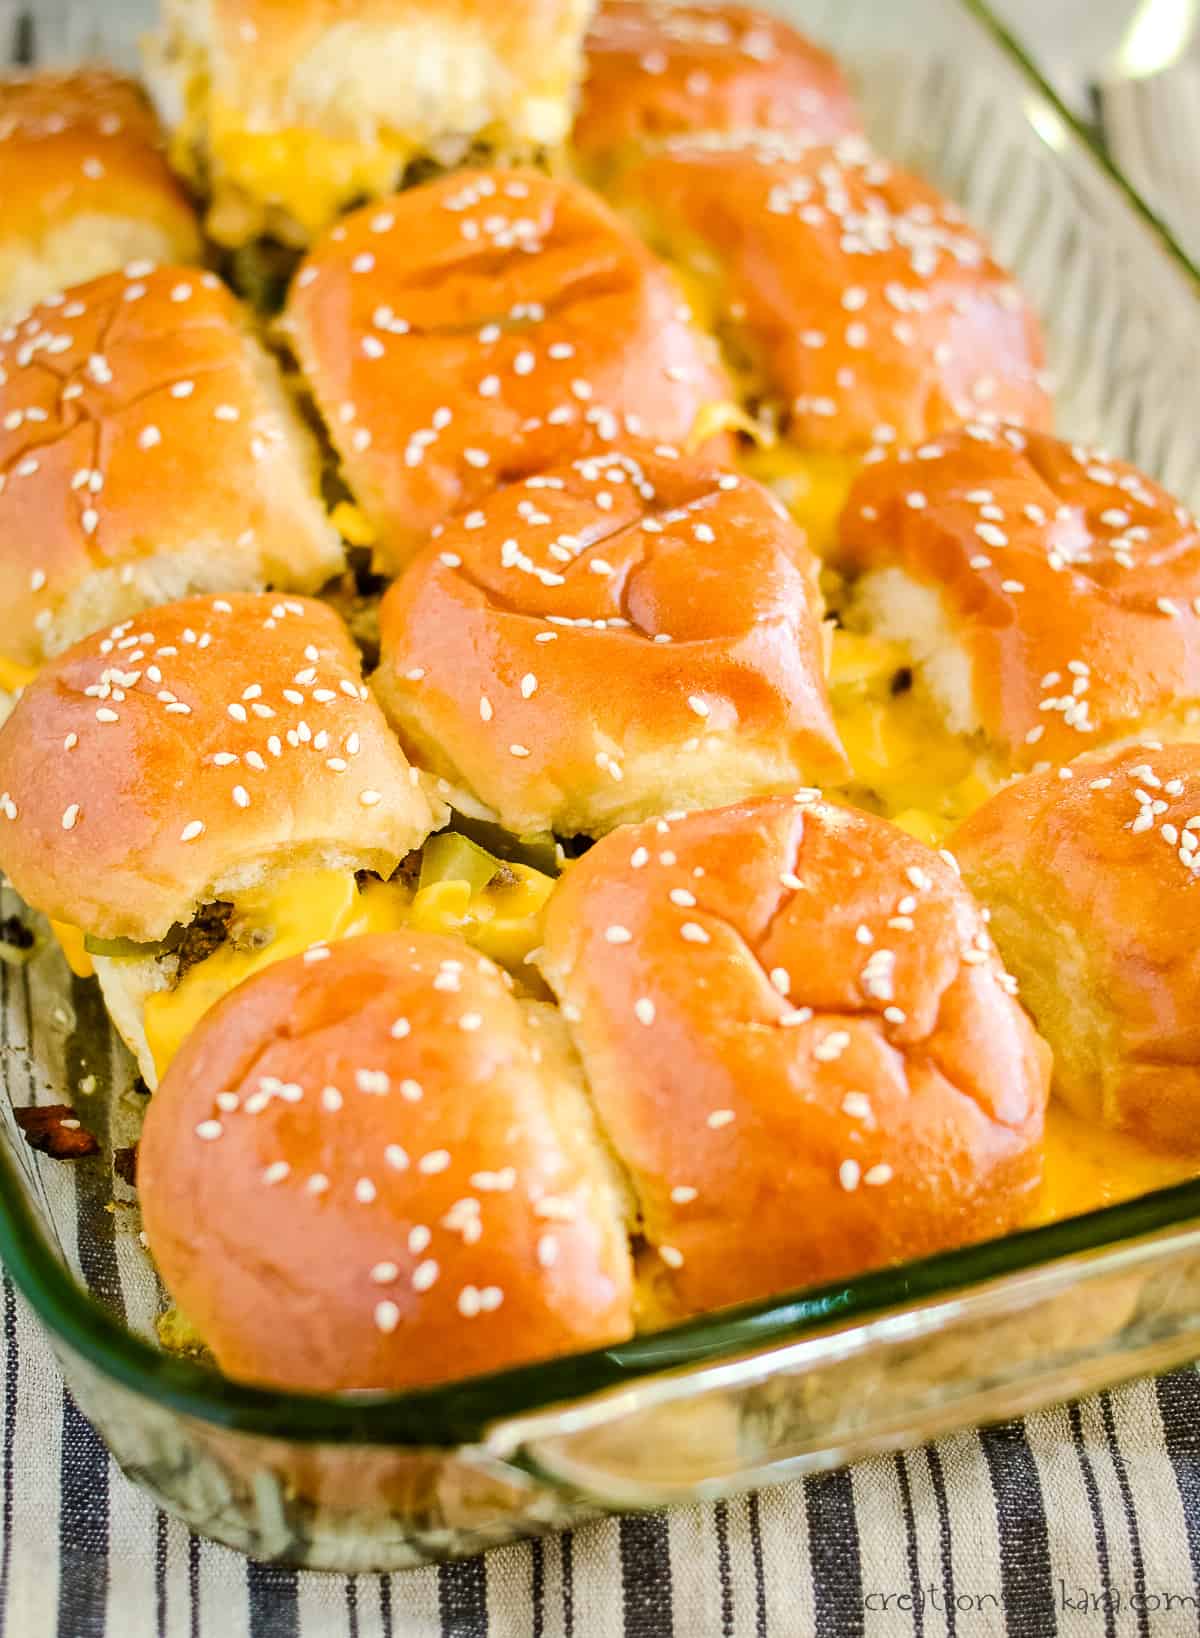 pan of baked hawaiian roll cheeseburger sliders